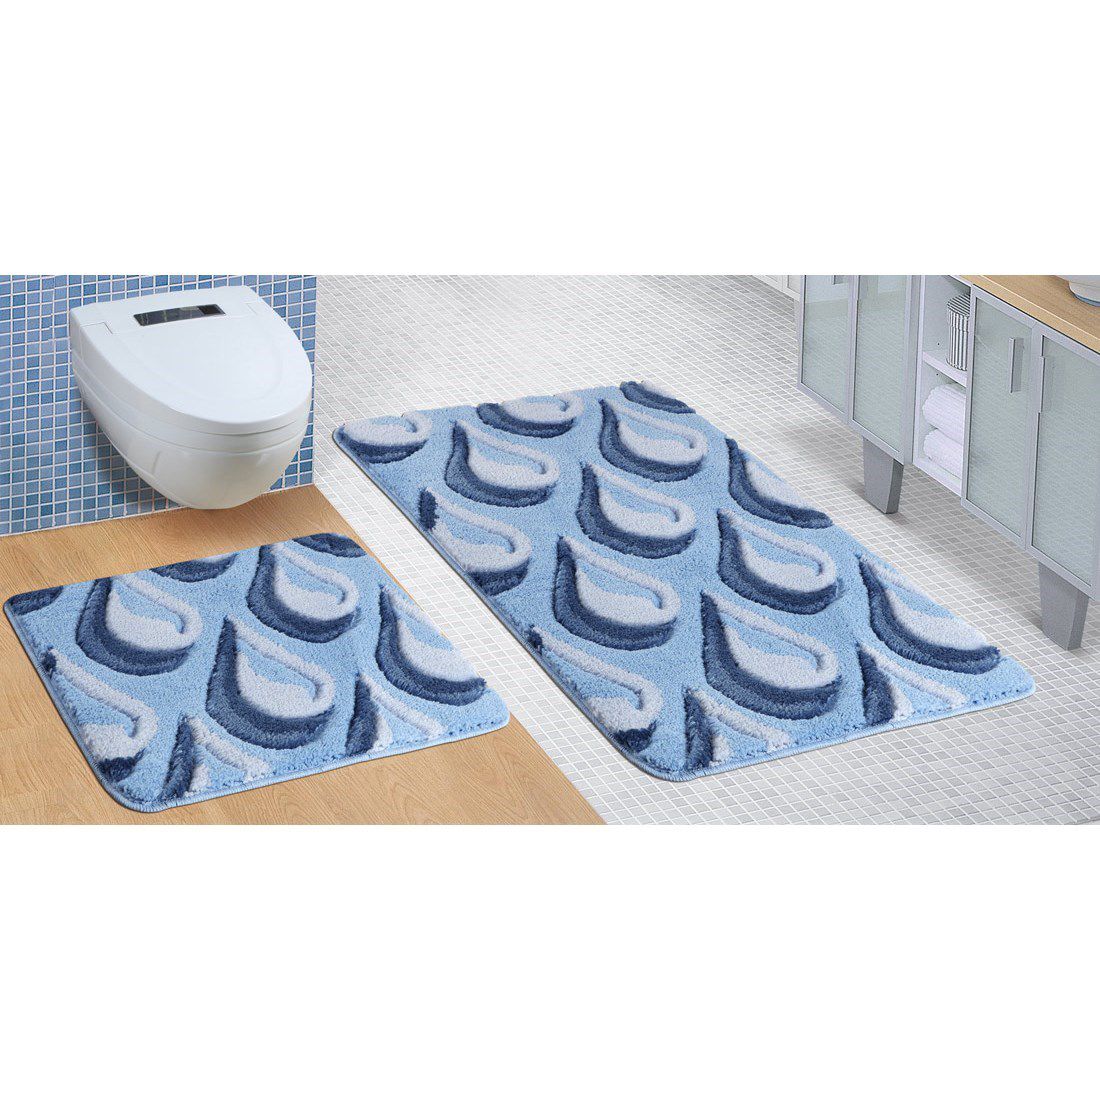 Bellatex Koupelnová sada - ULTRA Modré kapky, 60 x 100 cm, 60 x 50 cm - 4home.cz